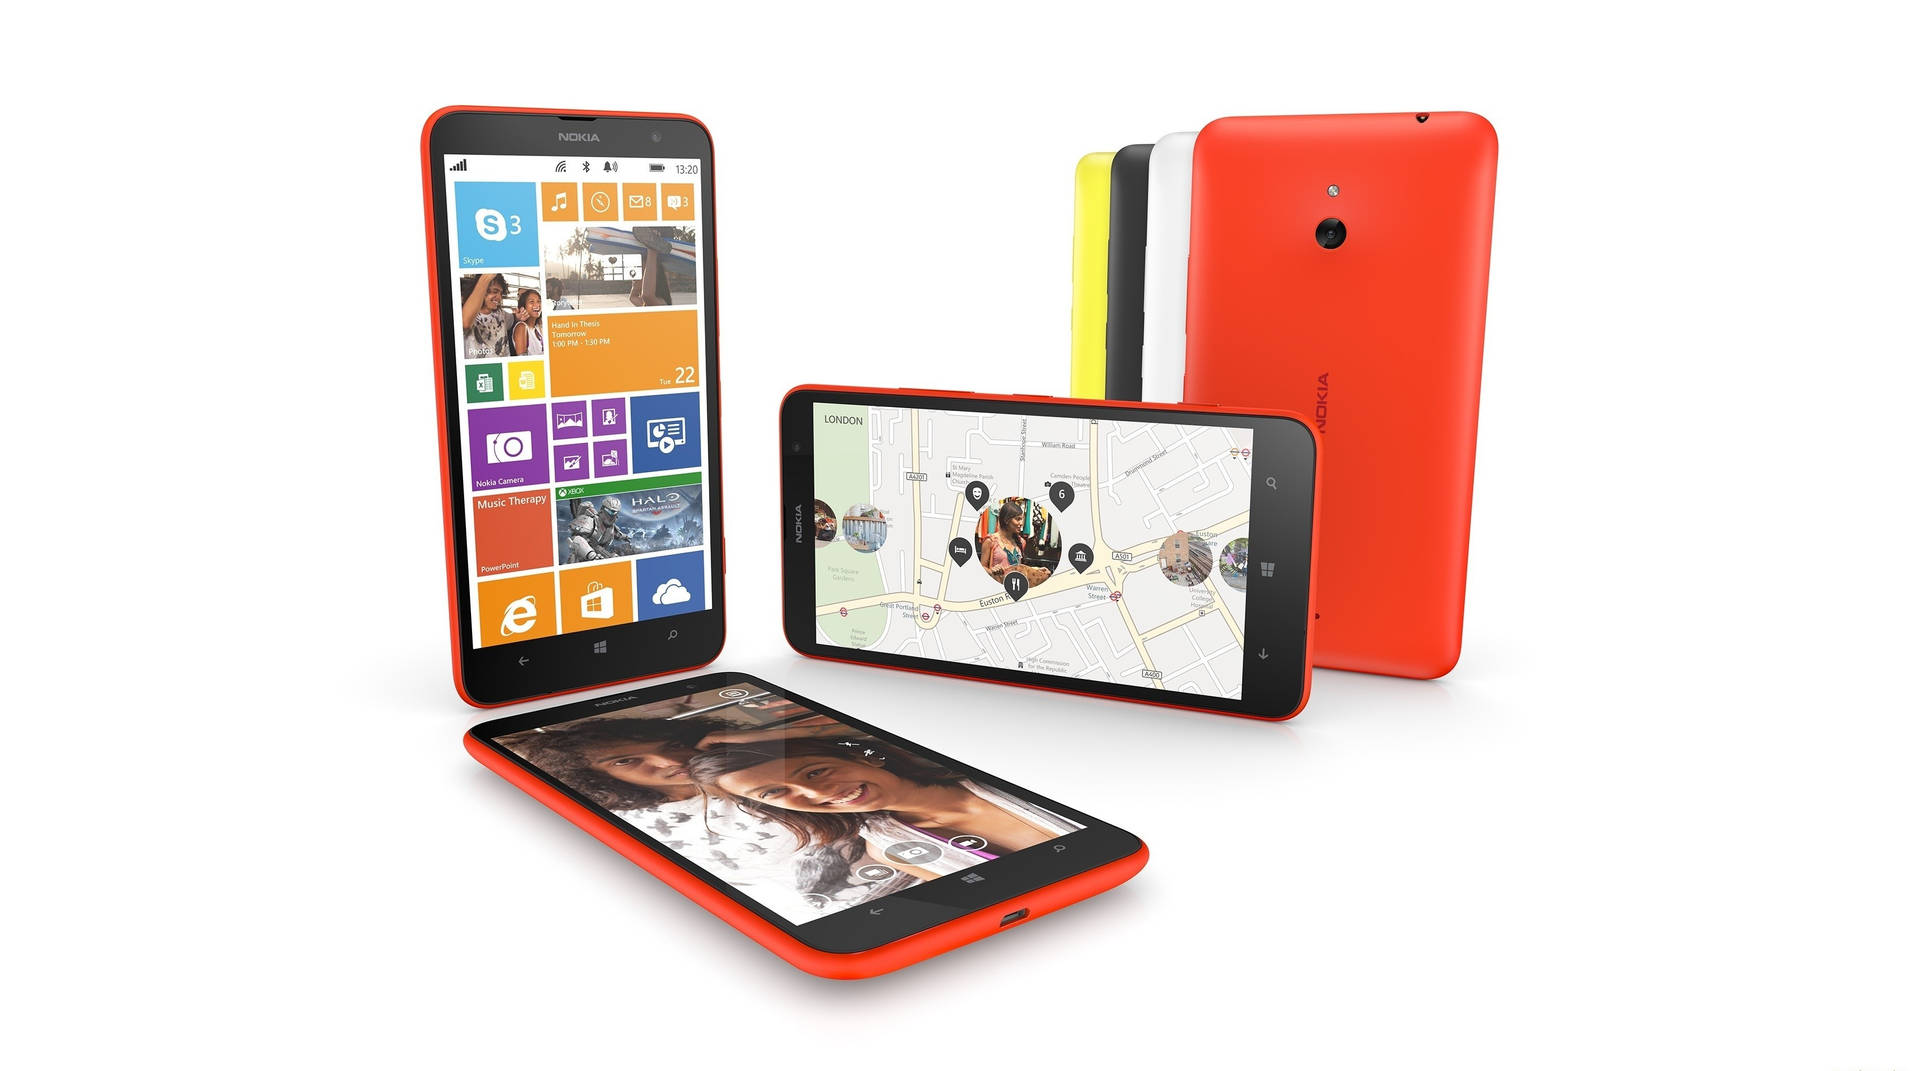 Nokia Lumia 1320 Phablet Smartphone Picture